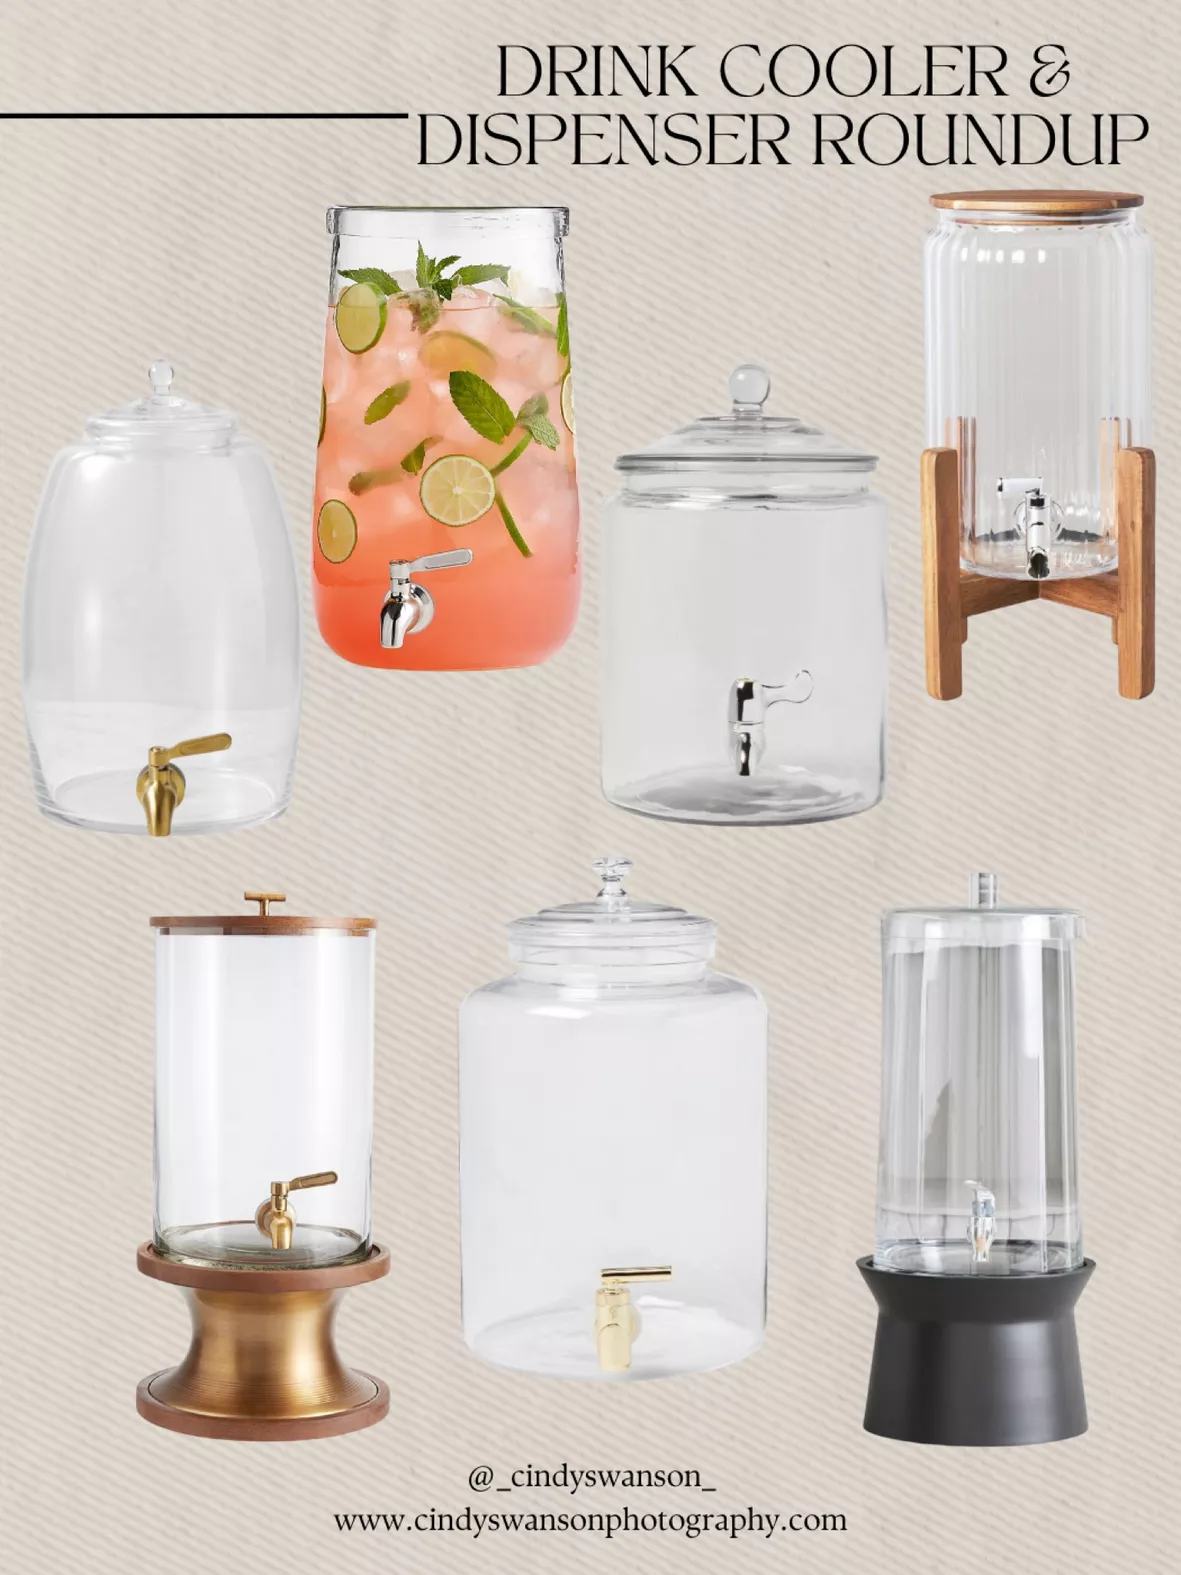 Williams Sonoma Glass Beverage Dispenser